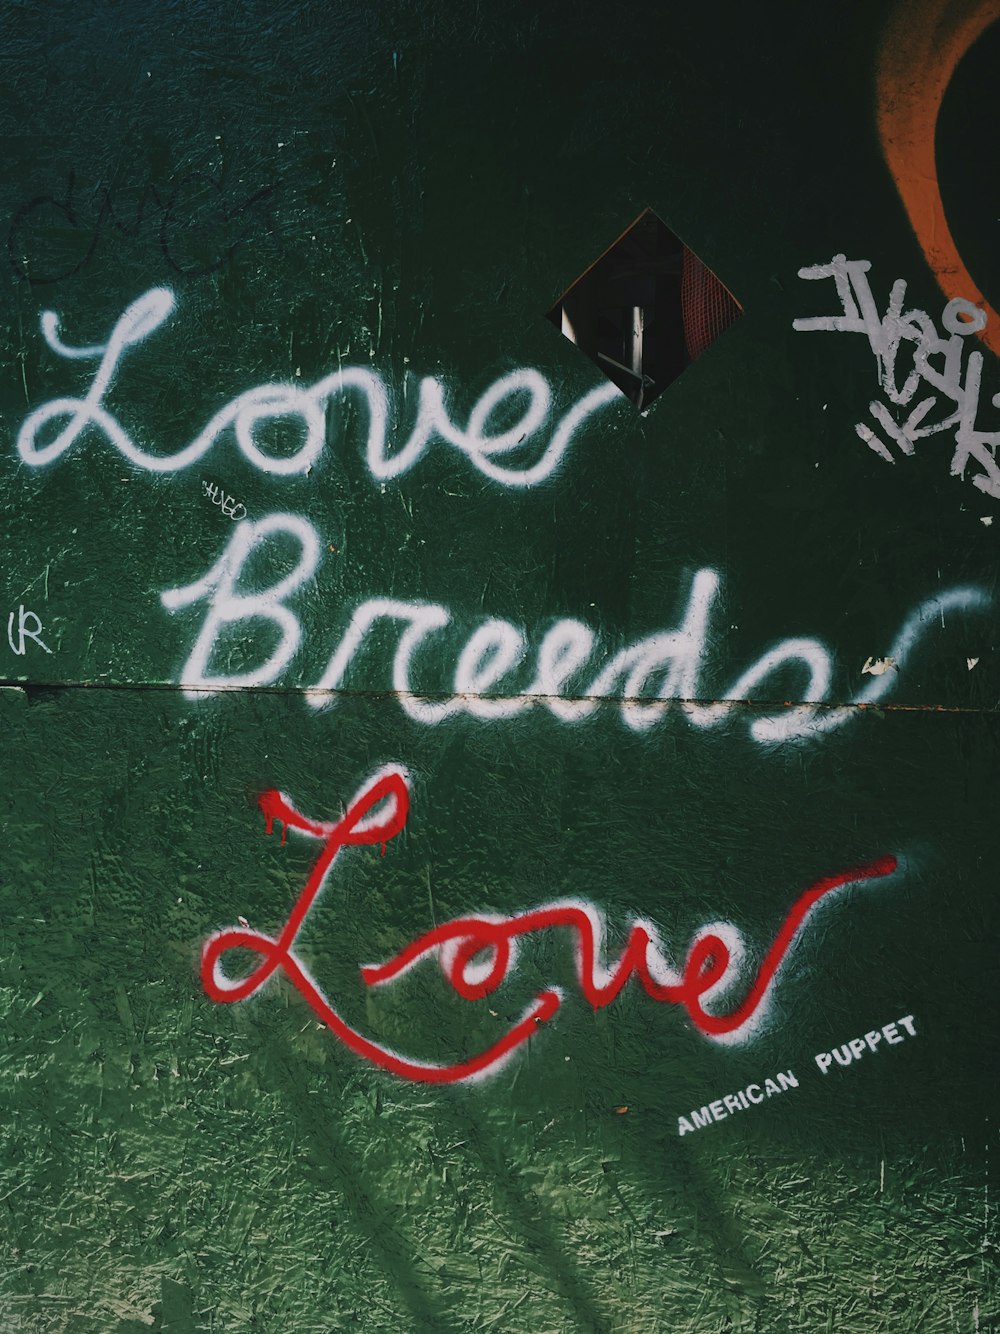 graffiti on a wall that says, love, bread, love